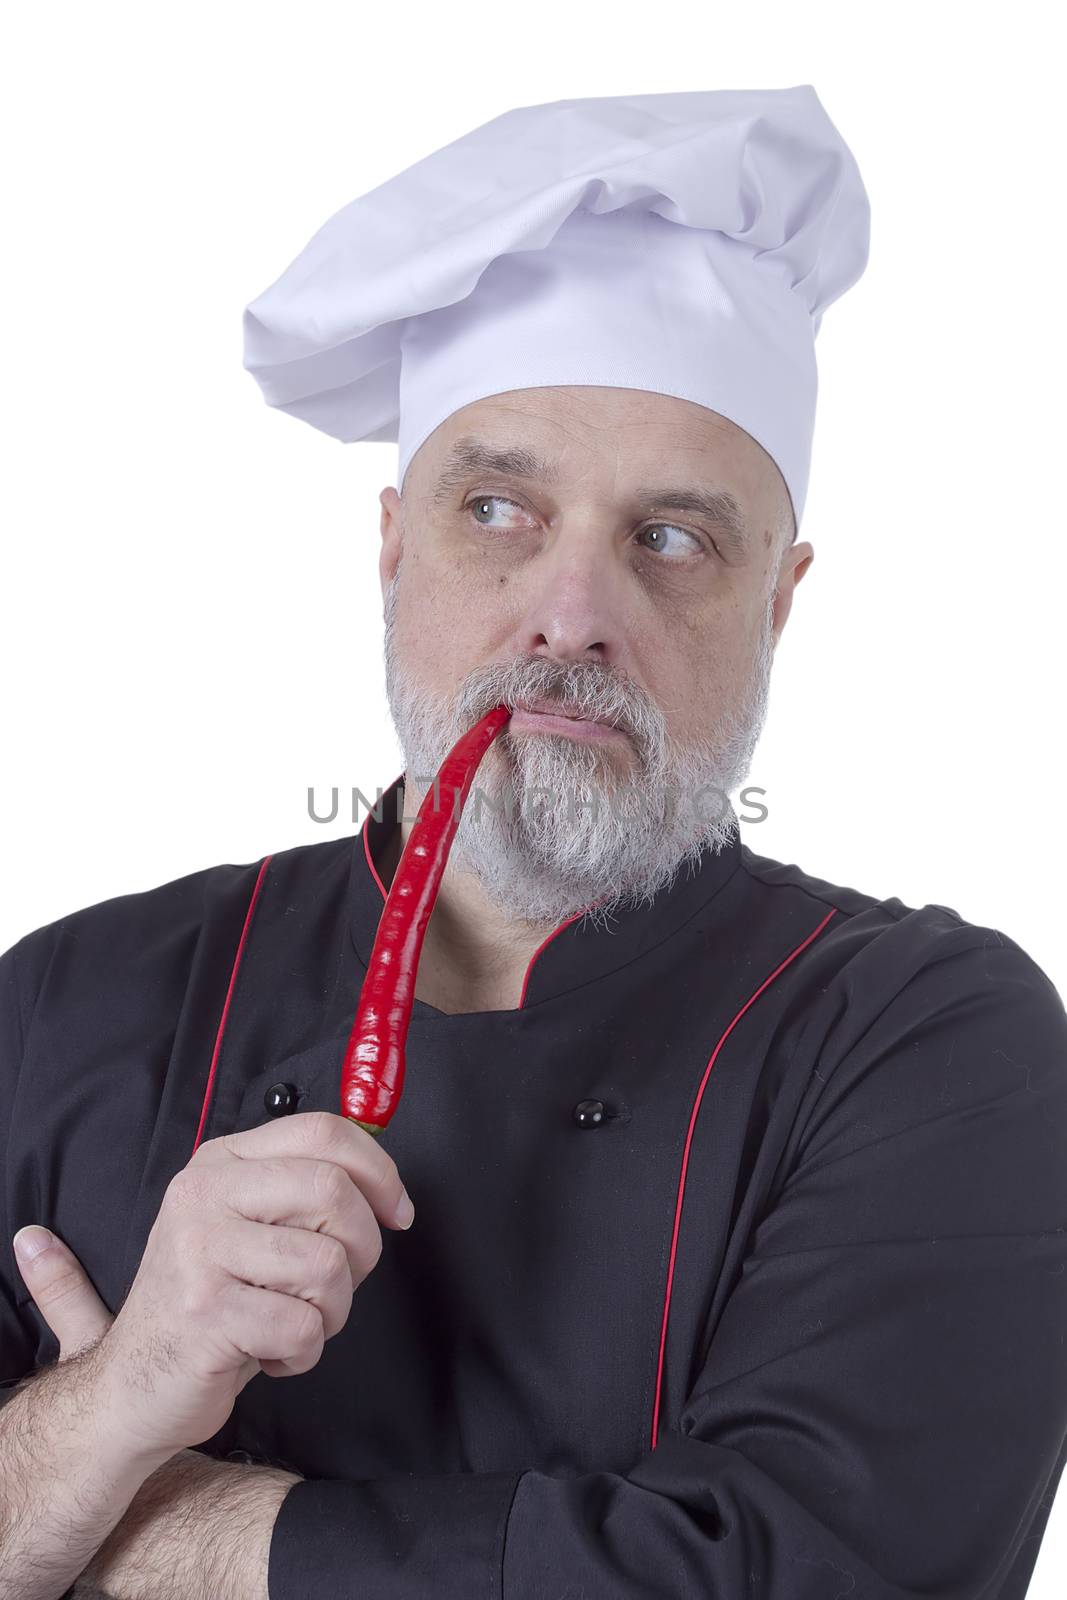 Chef biting chili by VIPDesignUSA